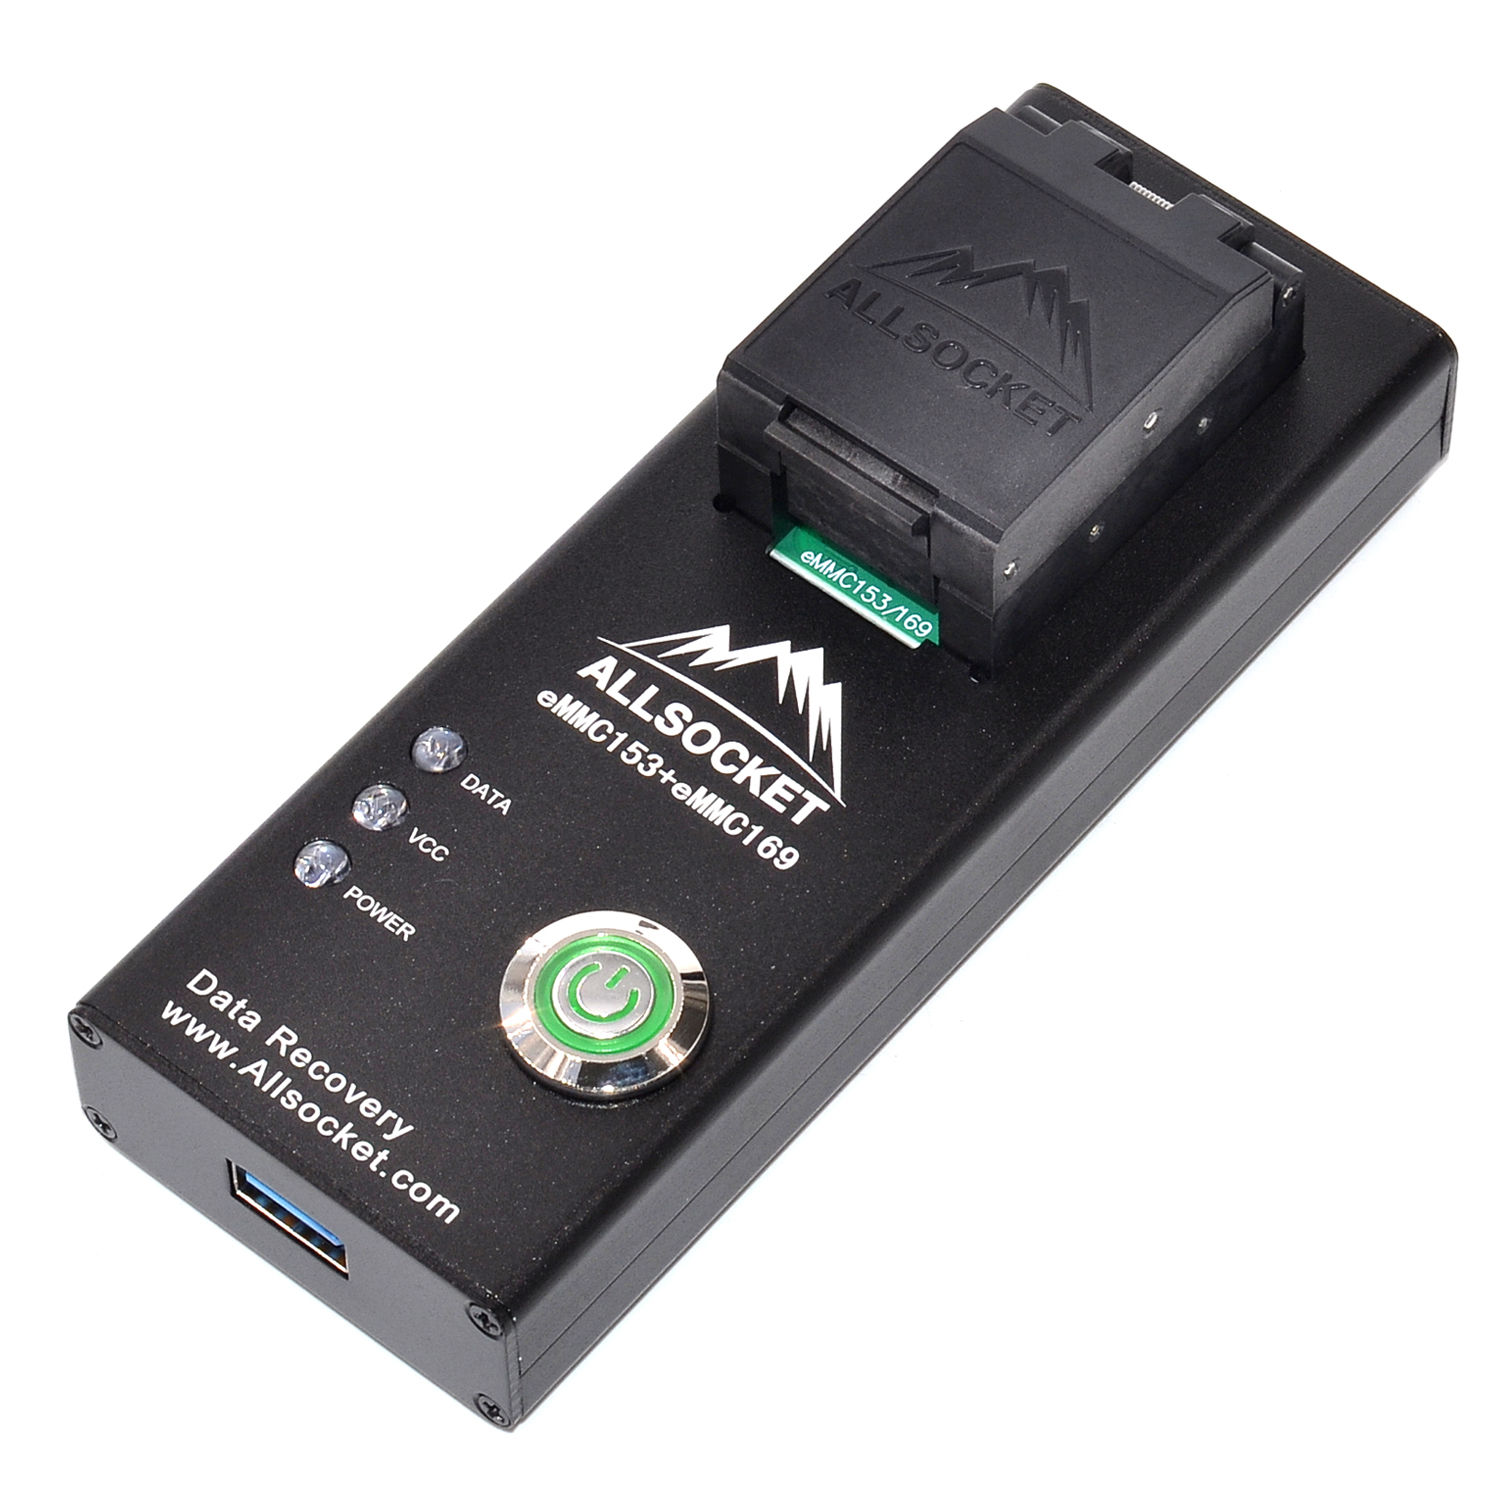 DS3000-USB3.0-emmc153+emmc169Data Reader